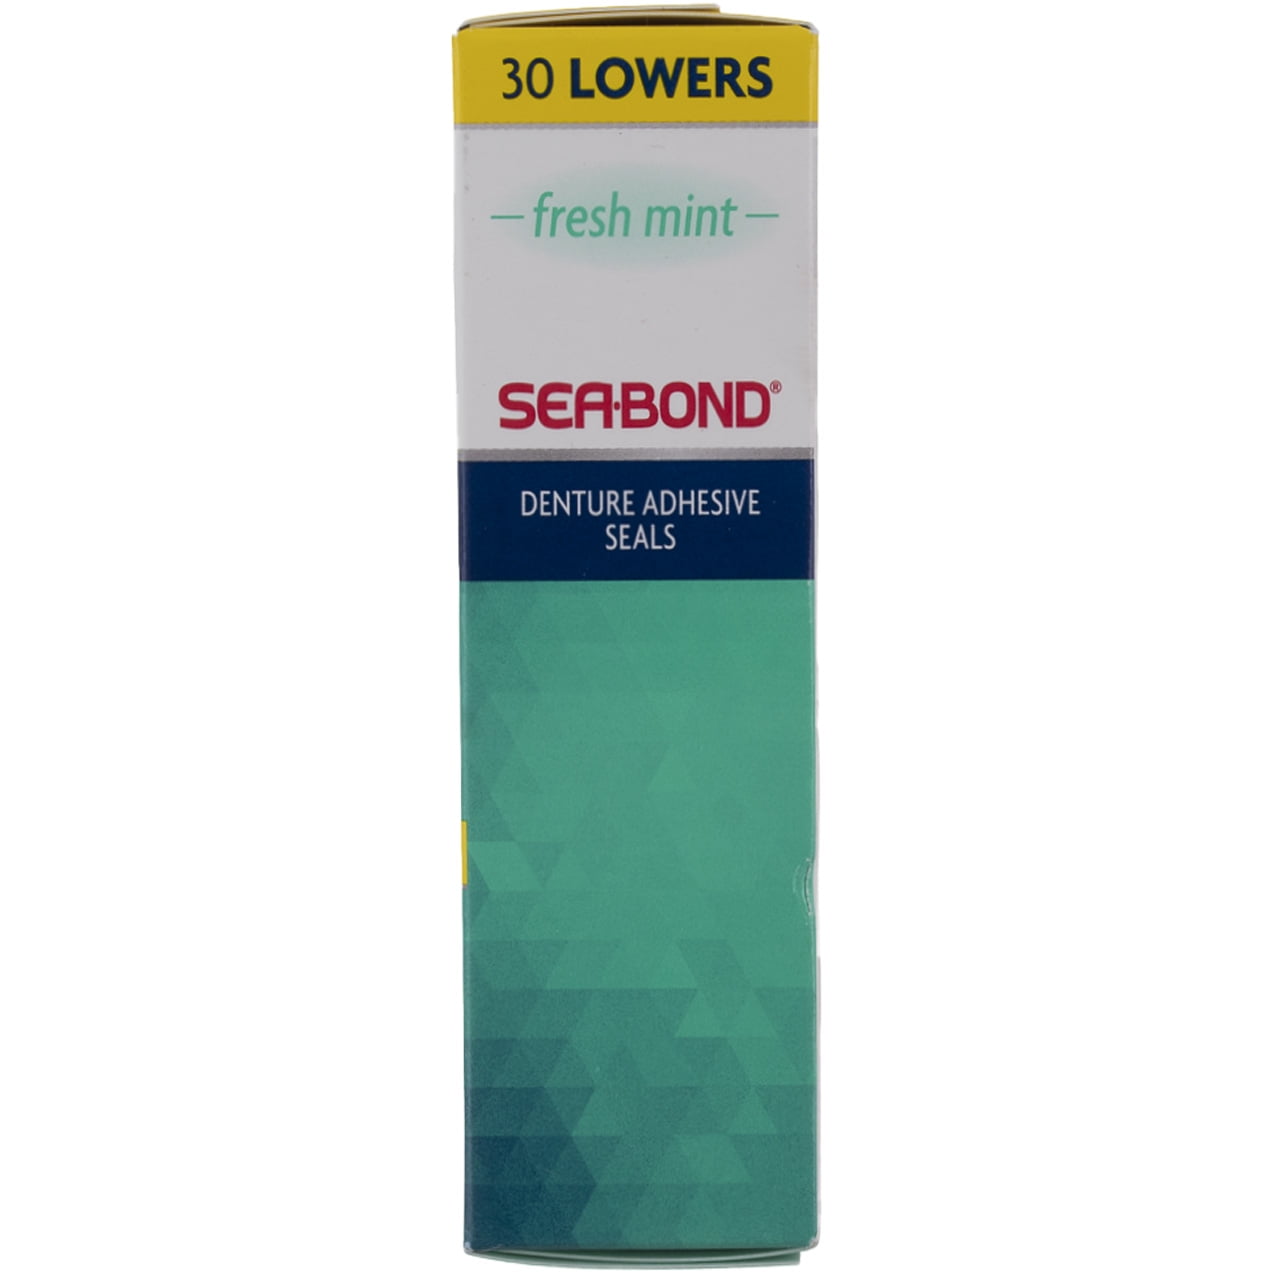 Sea Bond Denture Adhesive Wafers, Lowers, Fresh Mint - 30 lowers